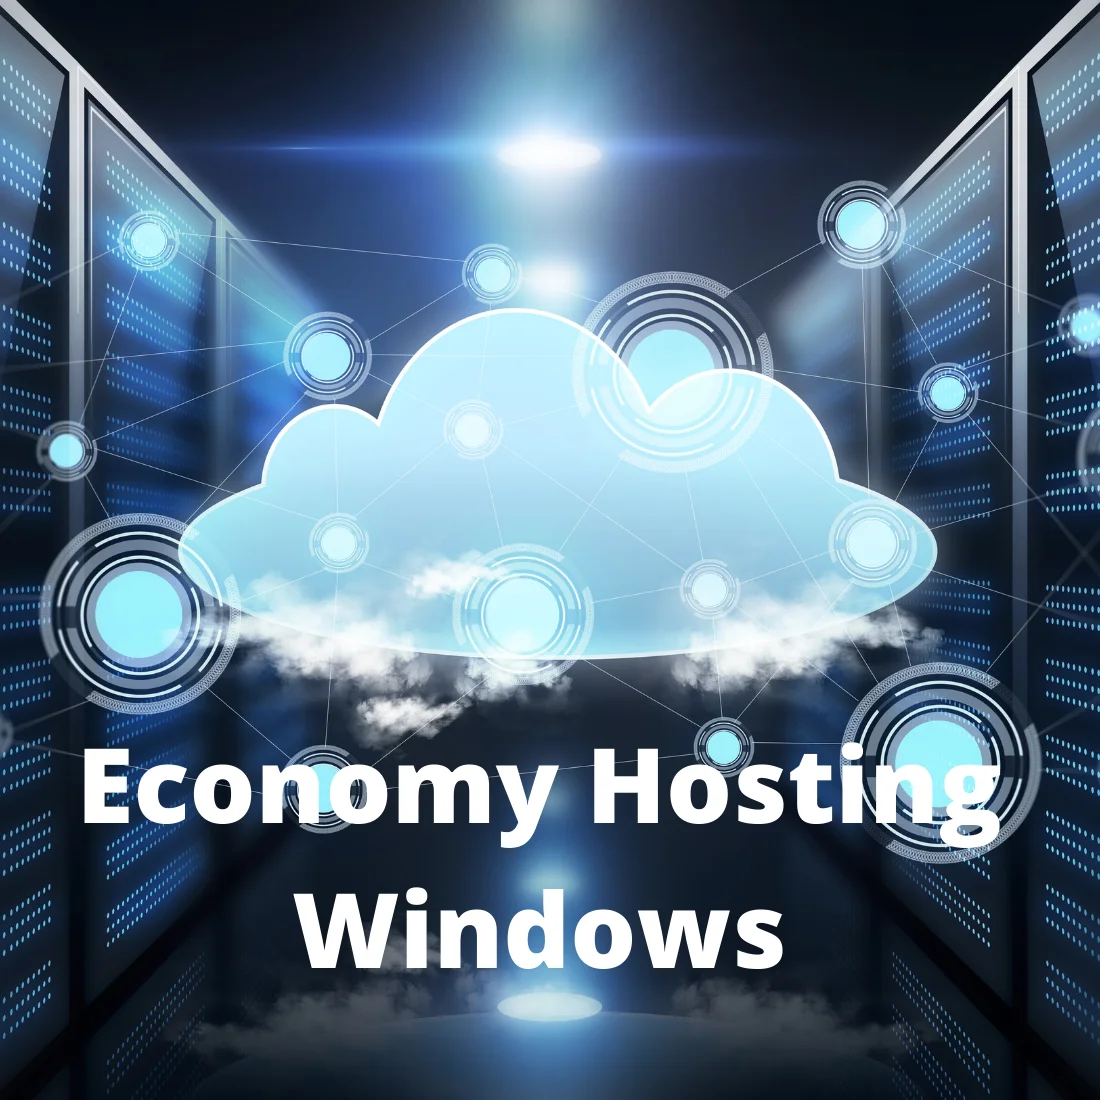 Windows Web Hosting (Economy)